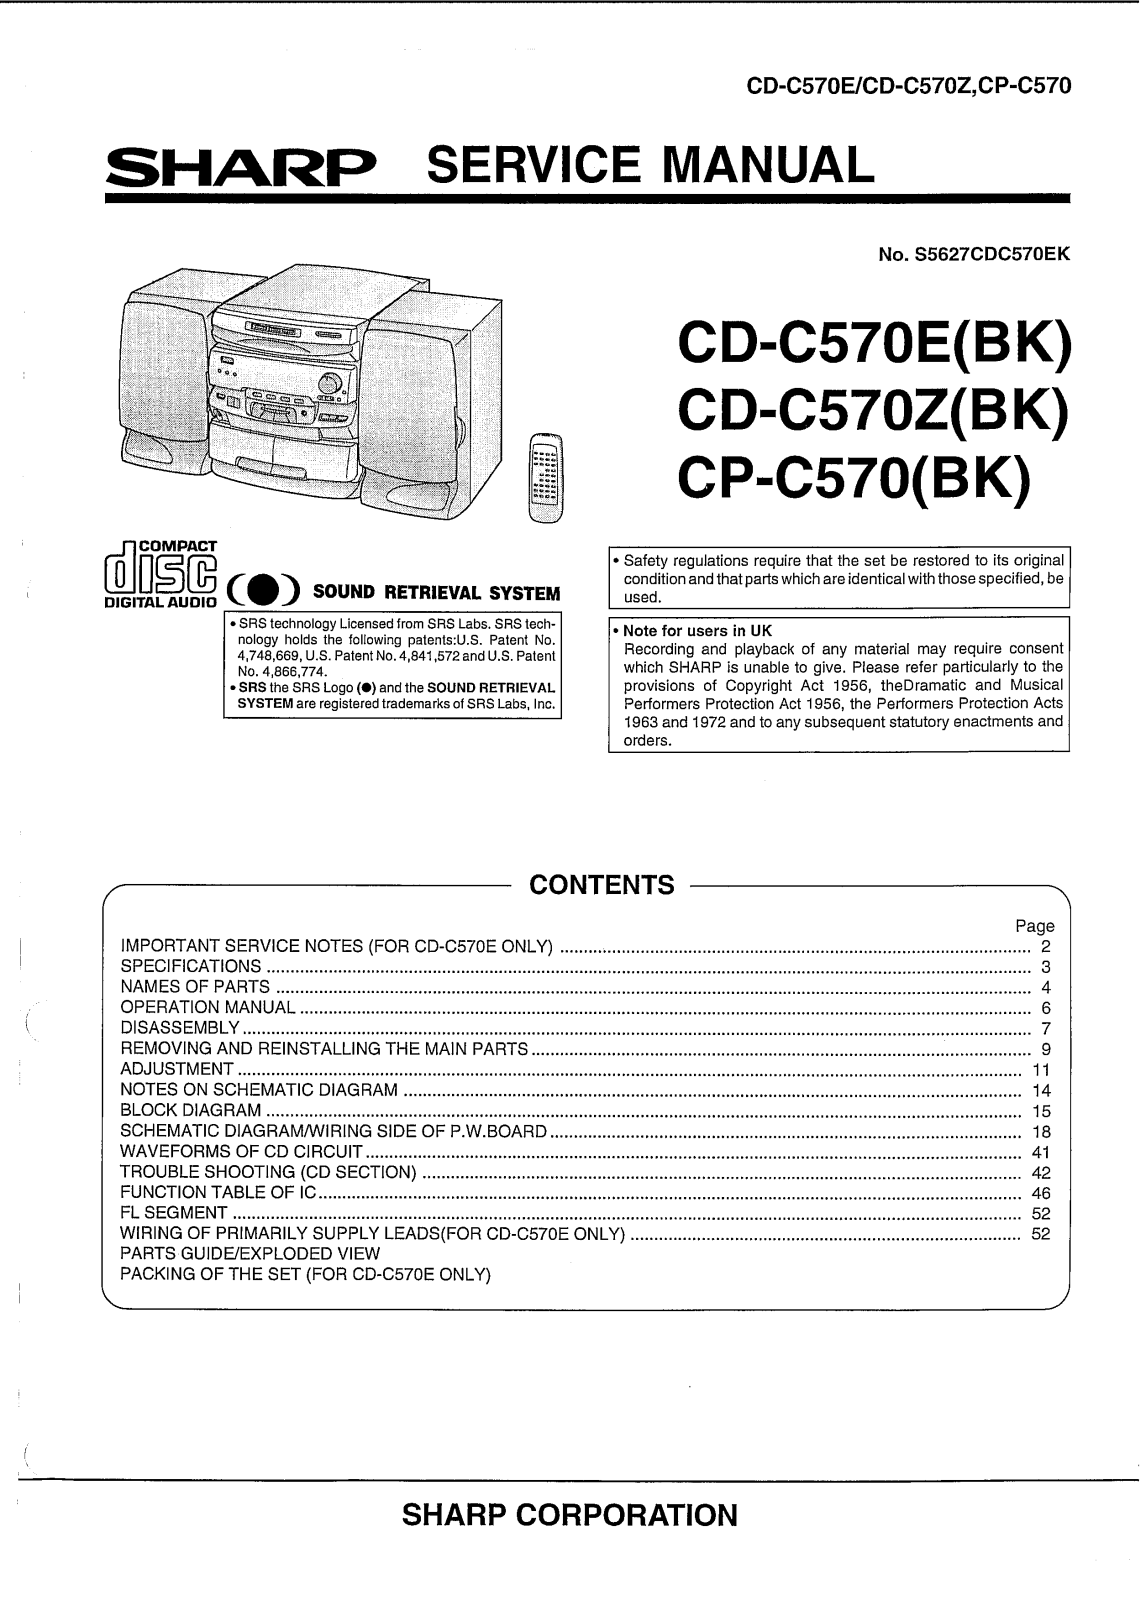 Sharp CD-C570E, CD-C570Z, CP-C570 Service Manual